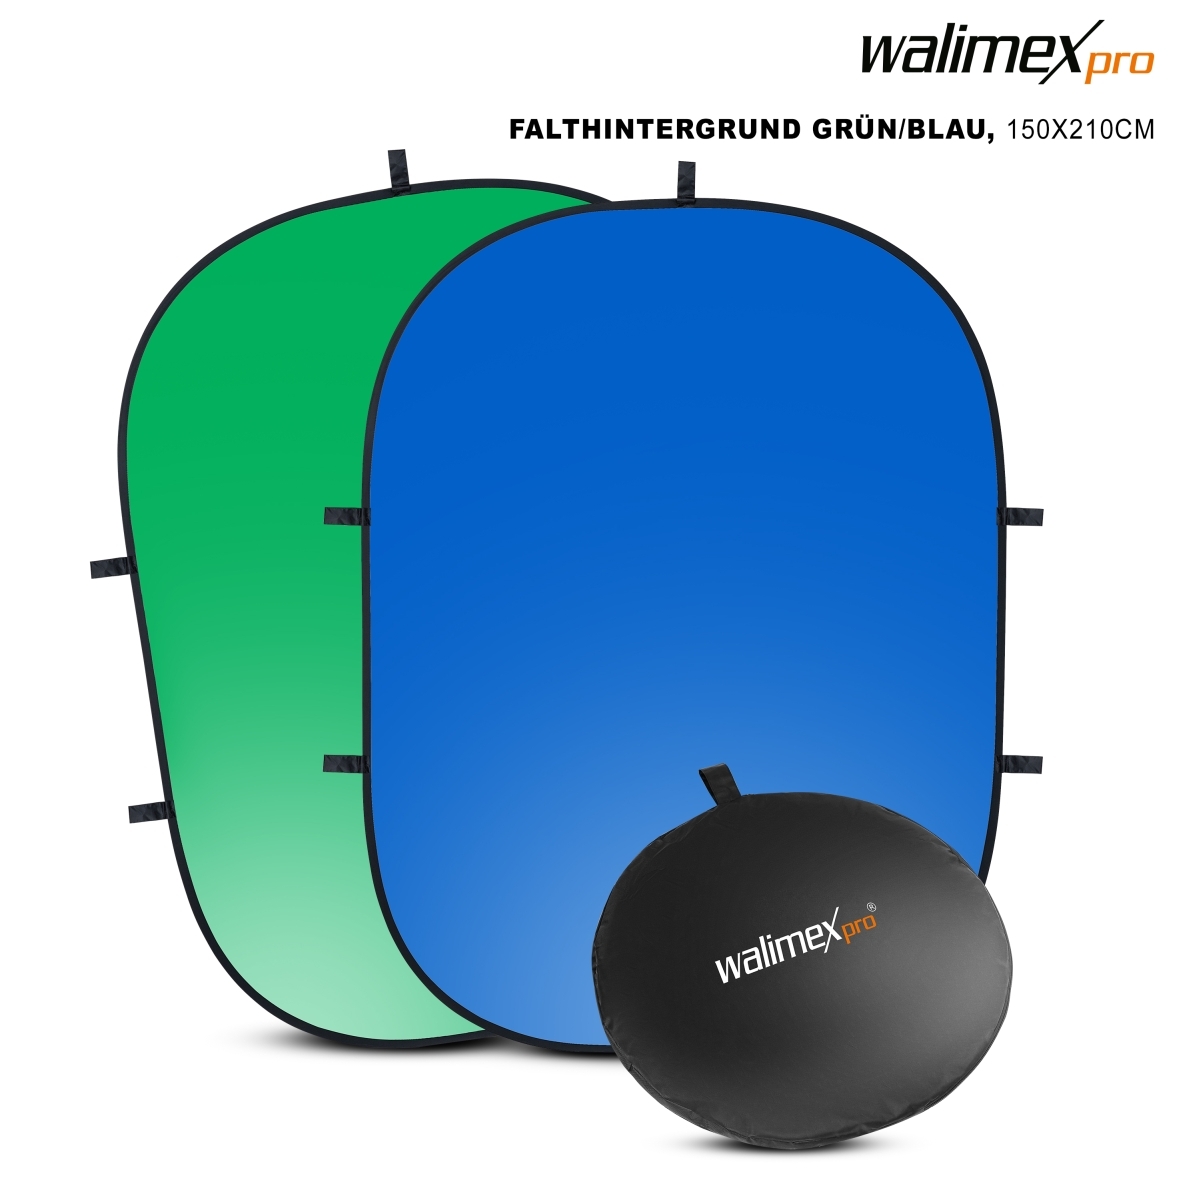 Walimex pro 2in1 Falthintergrund grün/blau 150x210